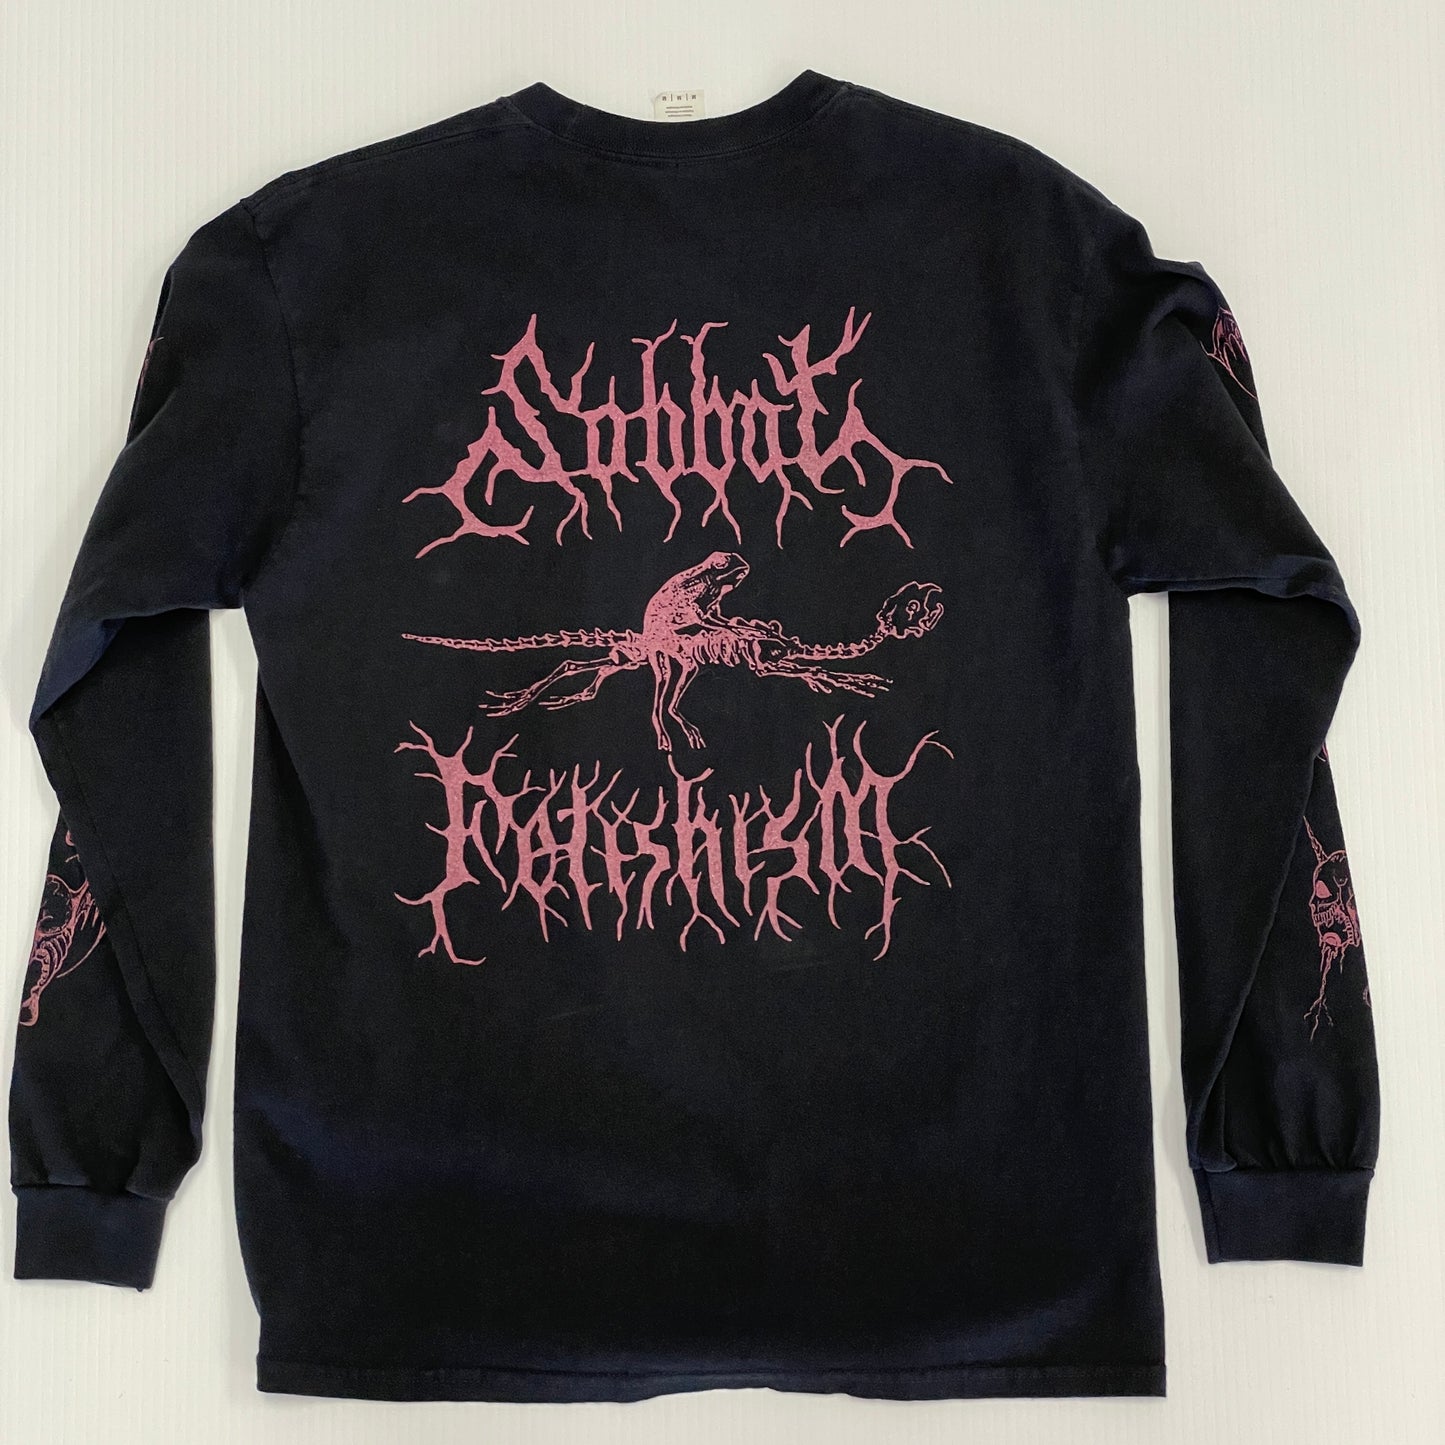 Sabbat - Fetishism long sleeve shirt size Medium